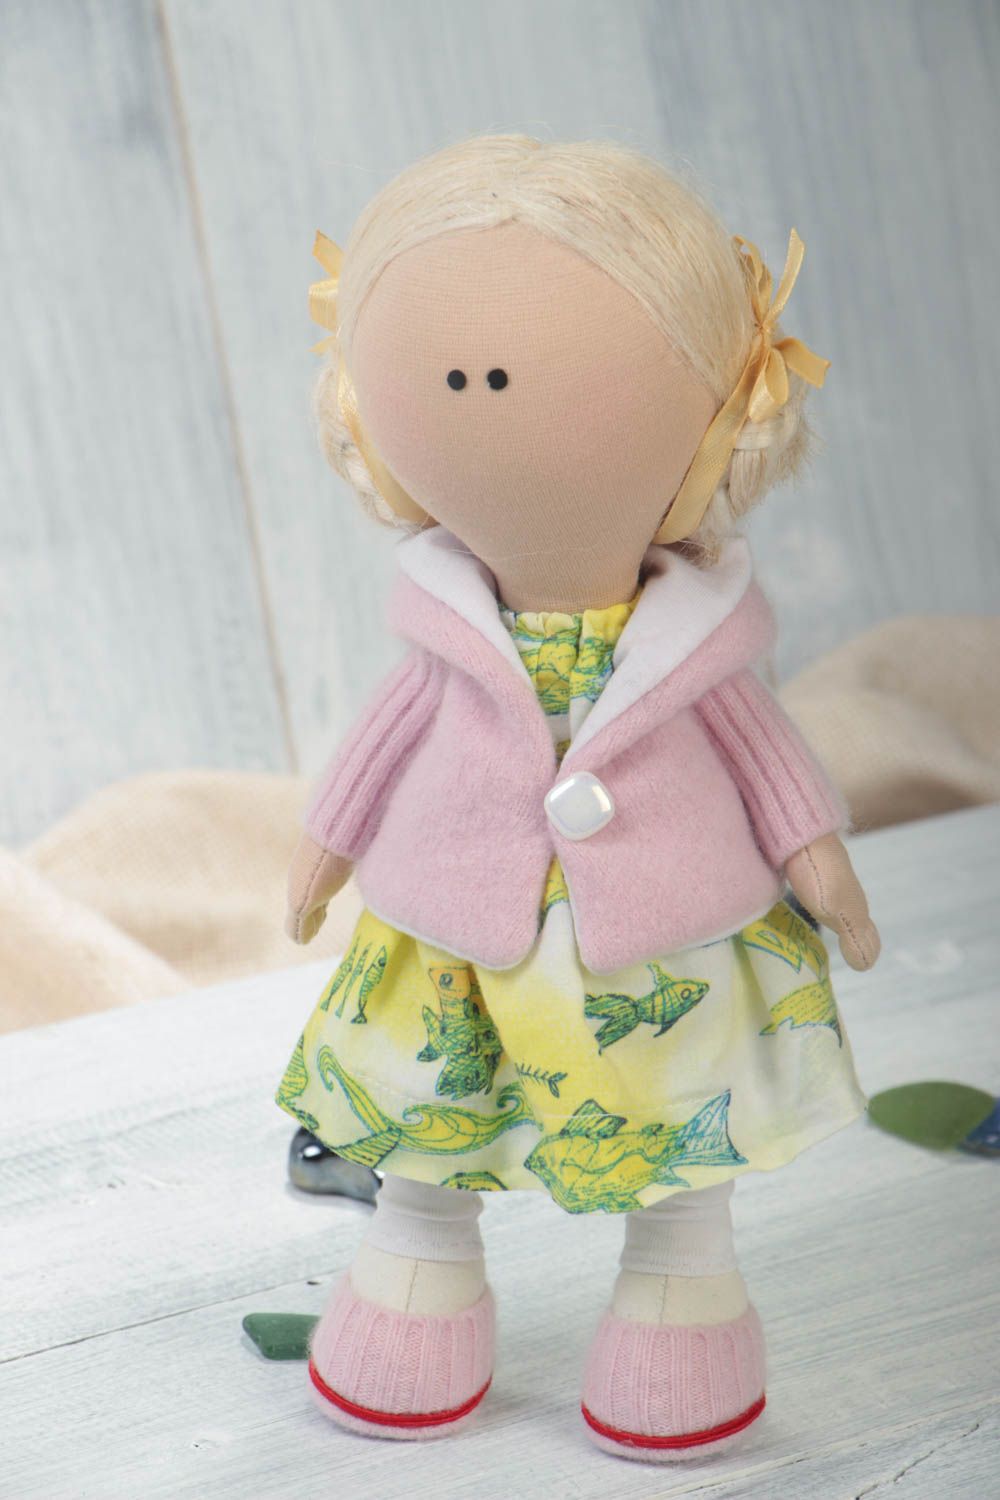 Handmade rag doll childrens soft stuffed toy best toys for kids gift ideas photo 1